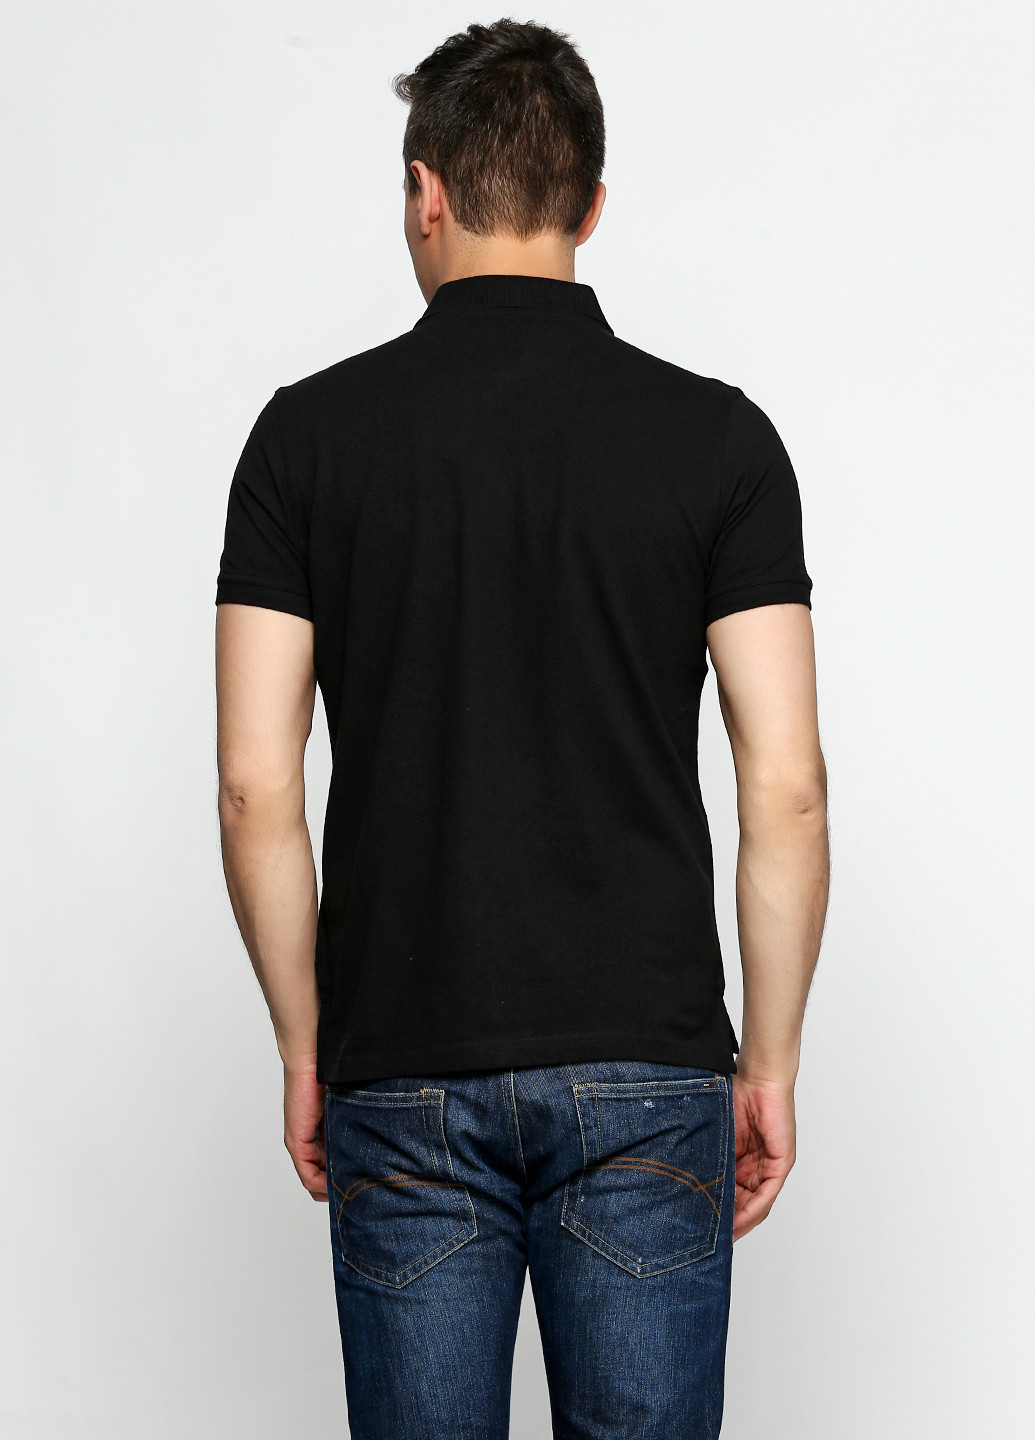 Черная футболка-поло для мужчин Pierre Cardin